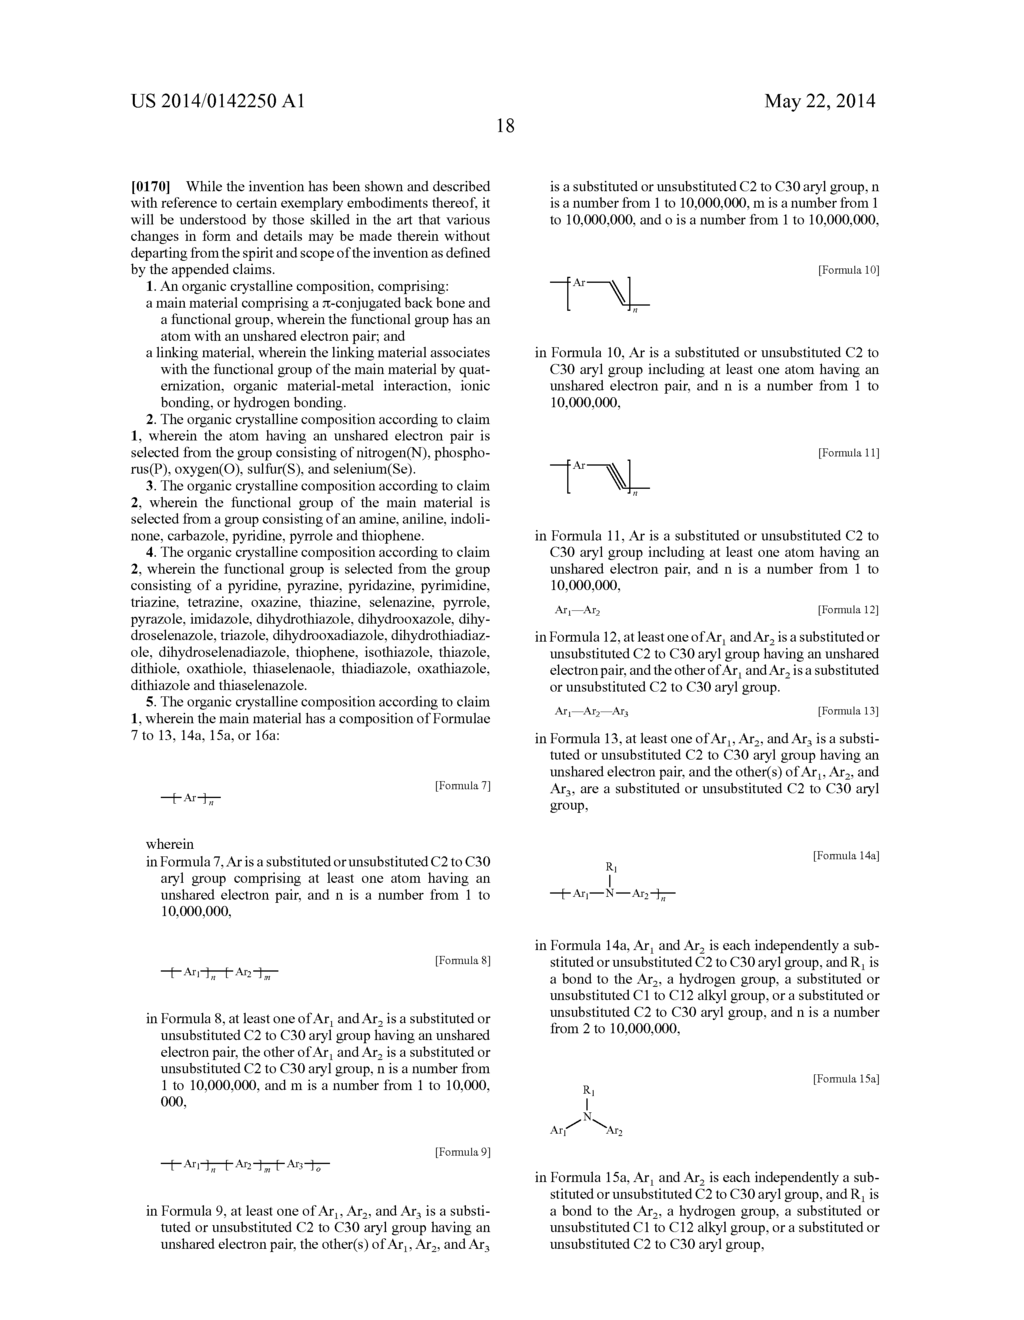 SUPRAMOLECULAR STRUCTURE HAVING SUB-NANO SCALE ORDERING - diagram, schematic, and image 44